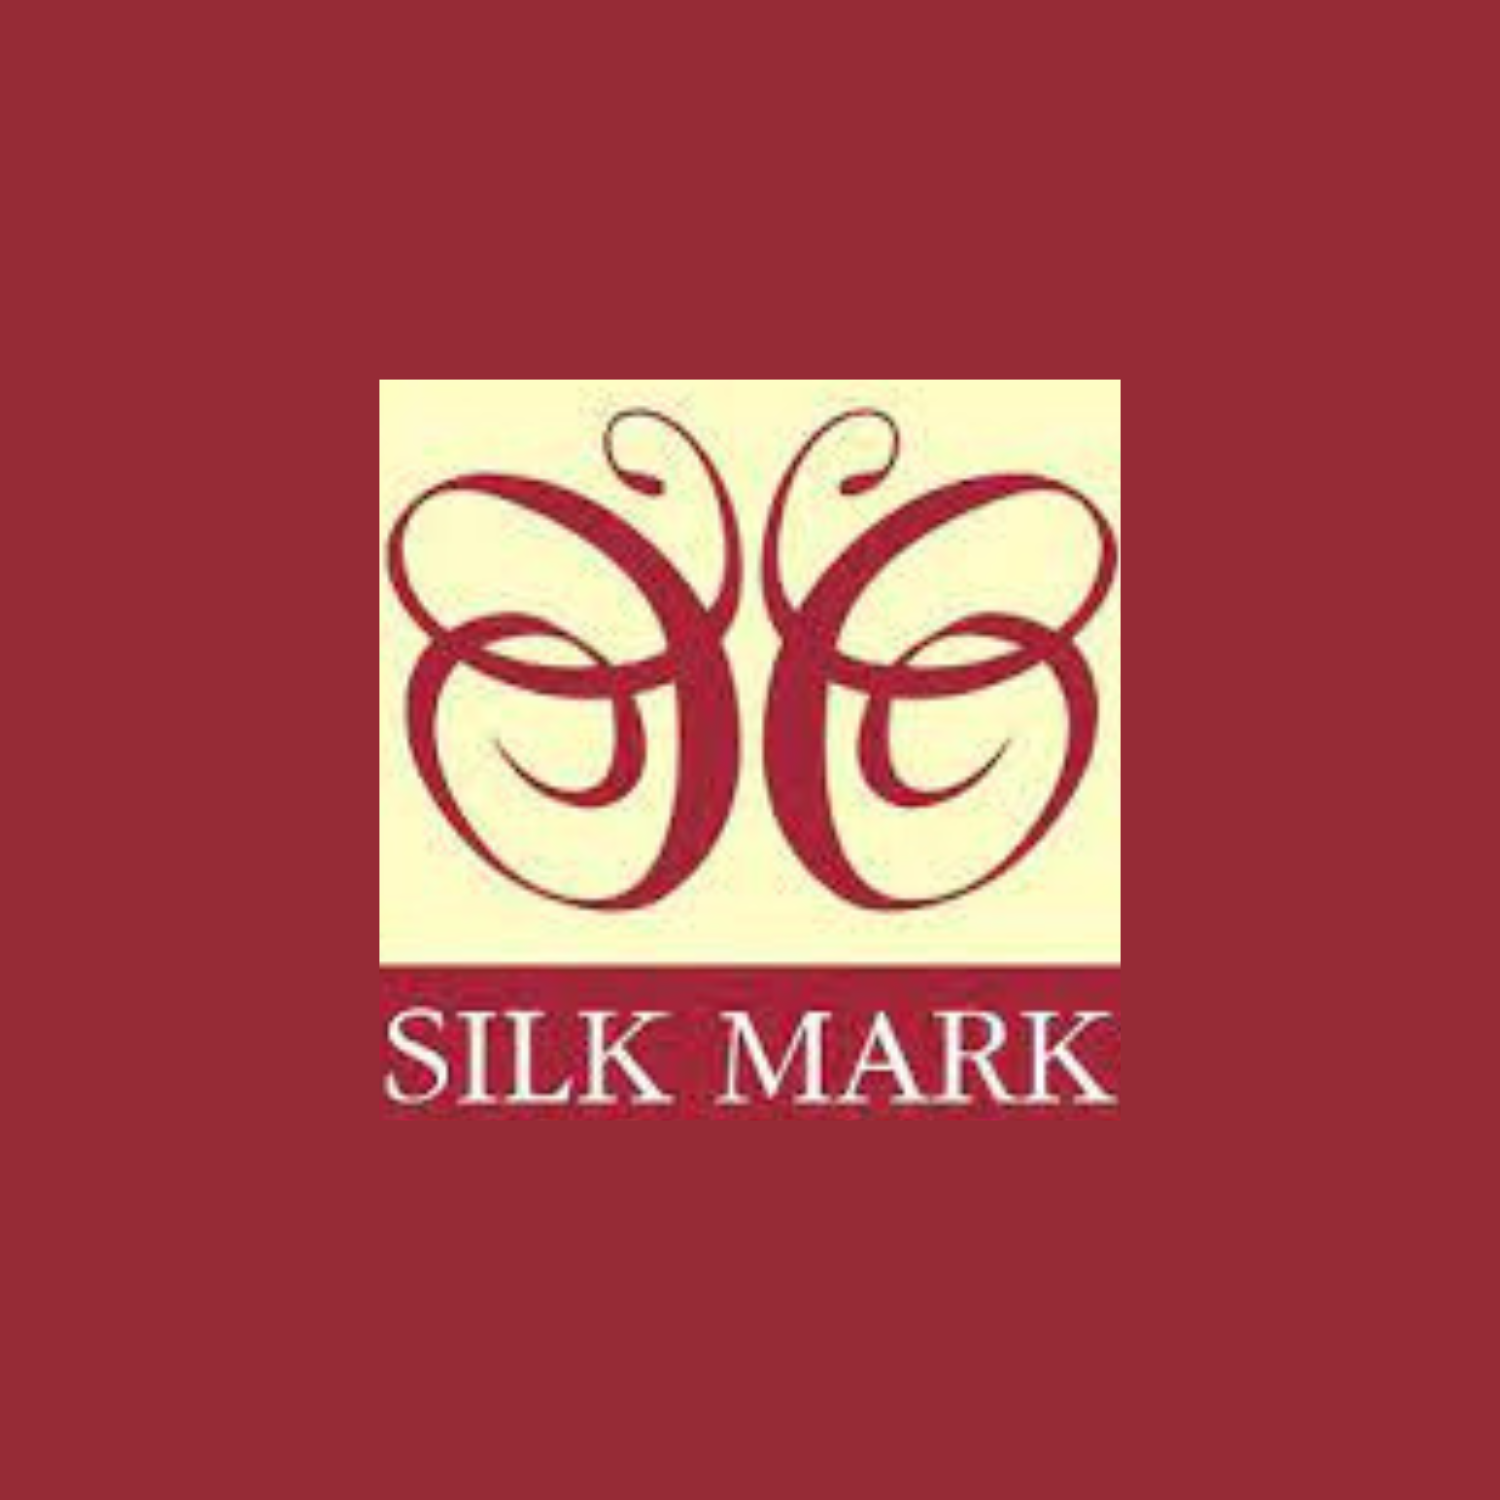 AM Silks – Dressing Every Occasion